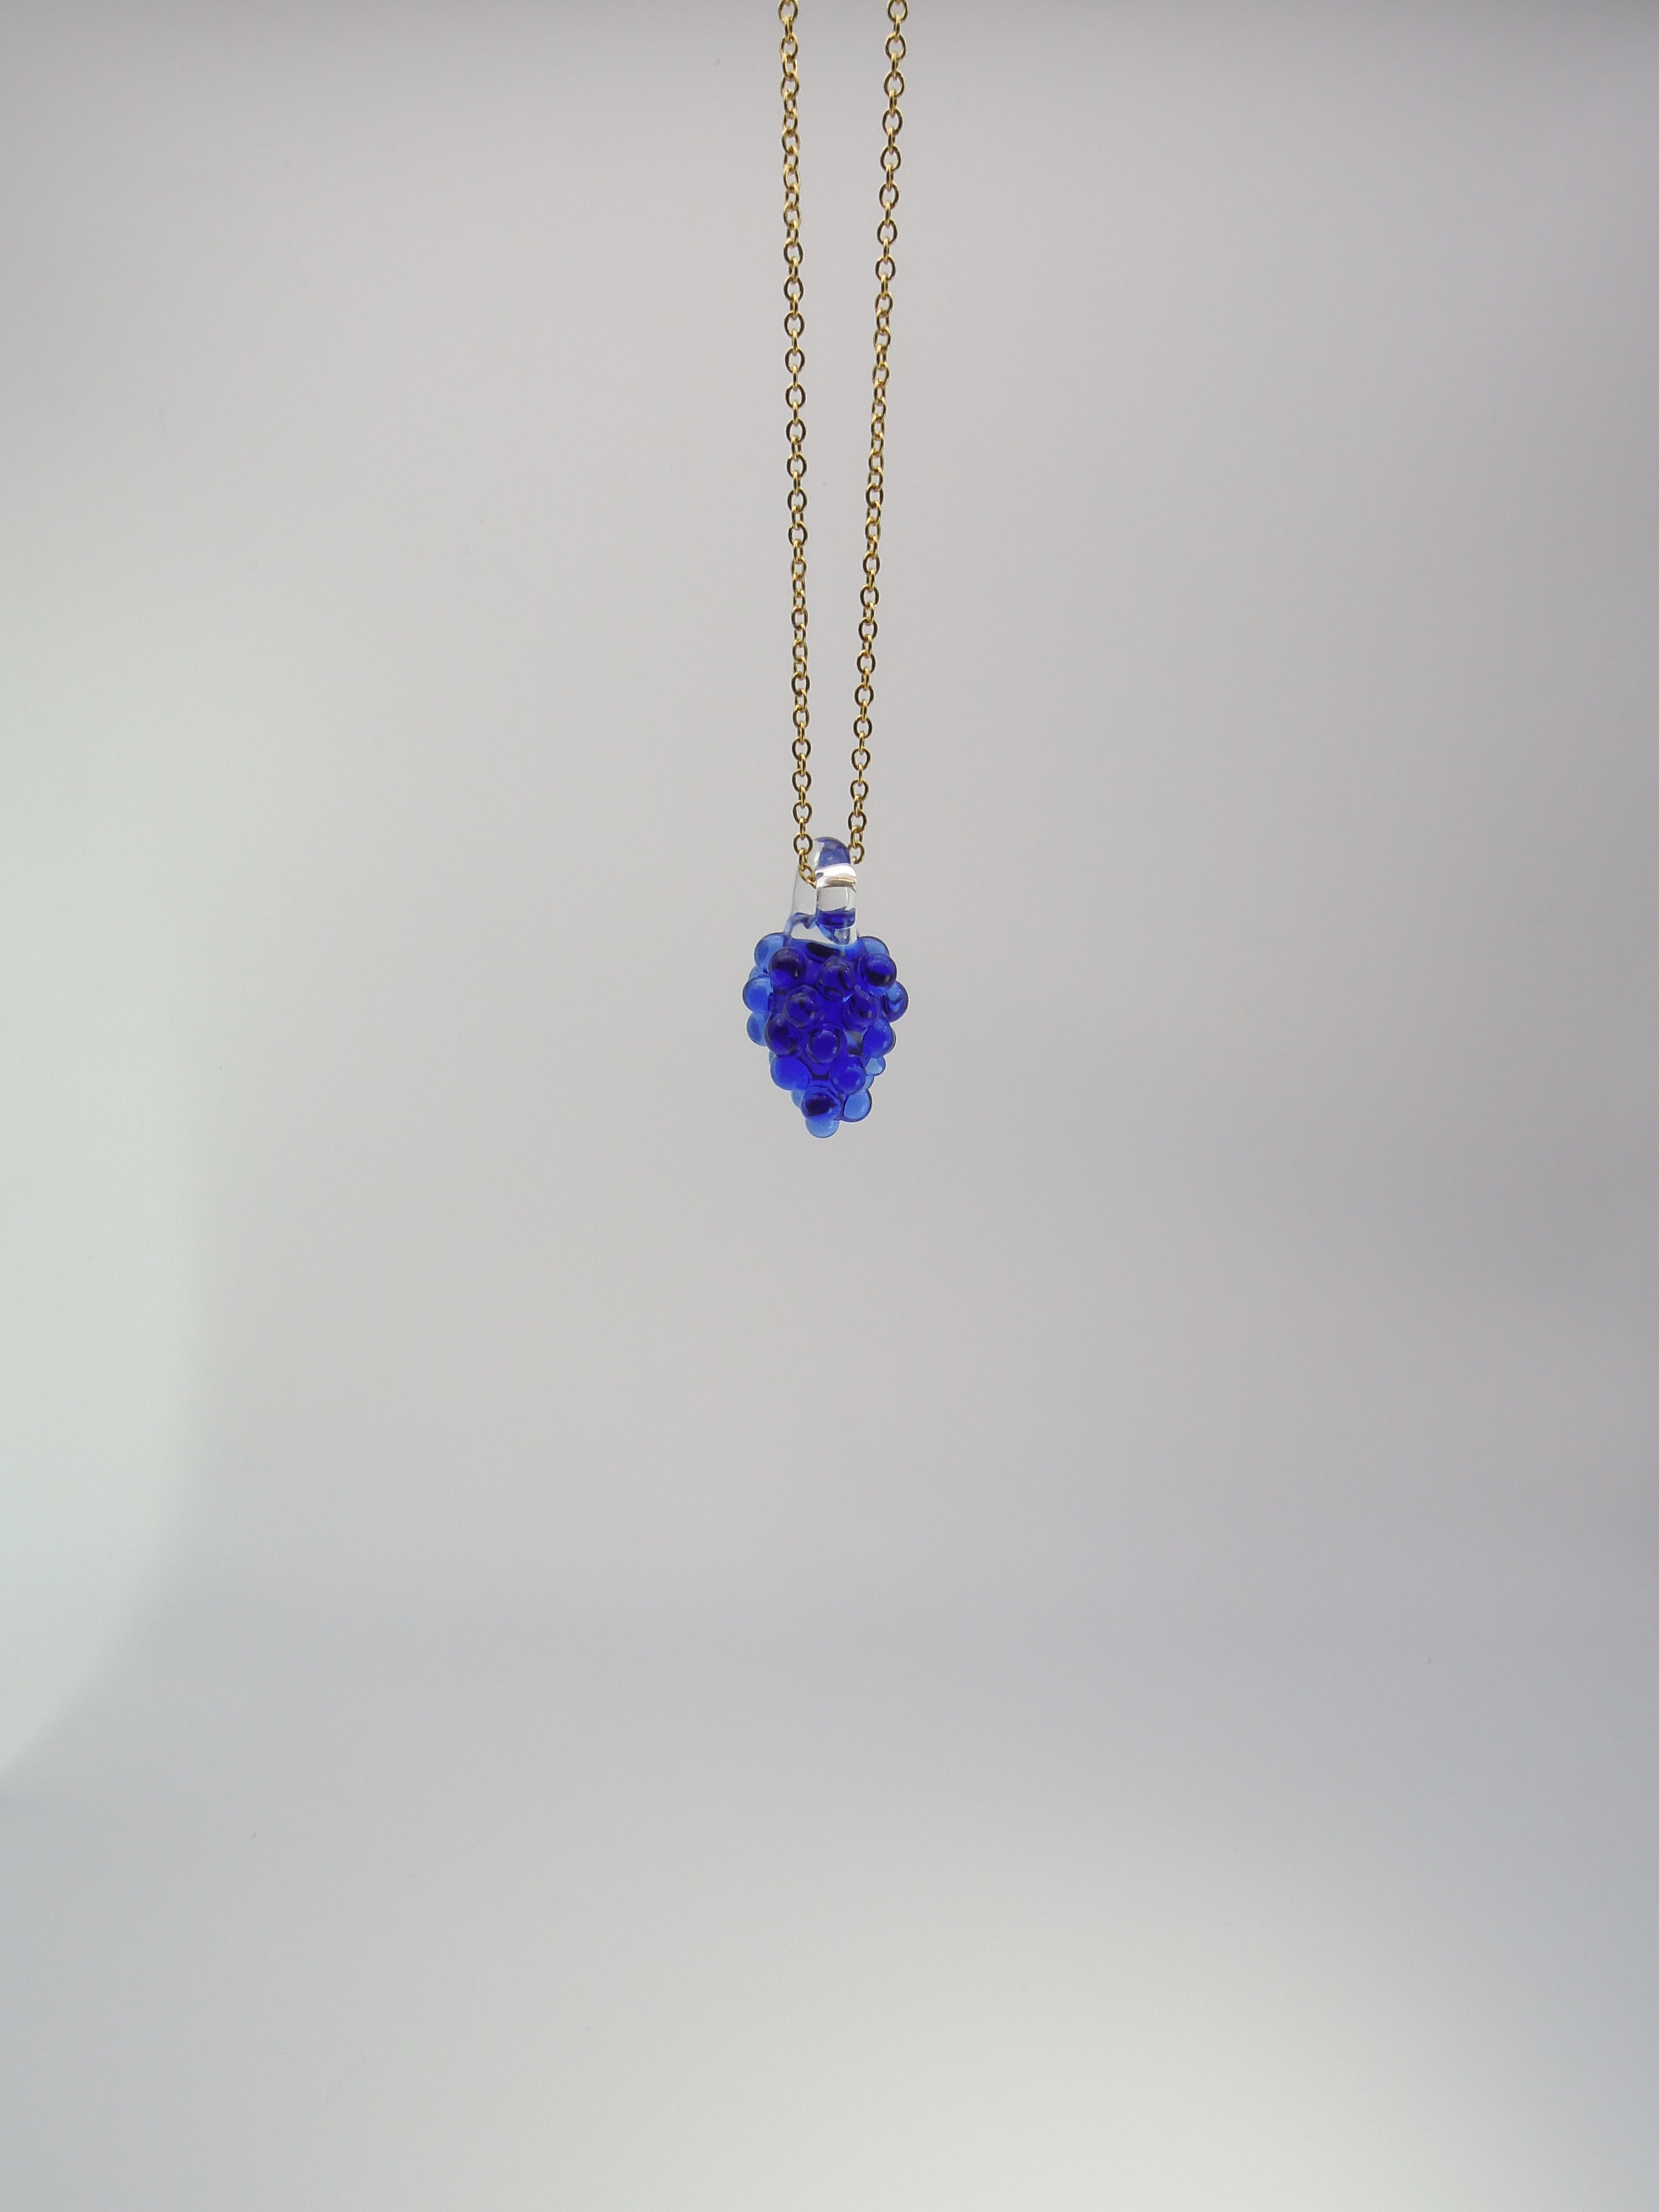 Blue Grape Glass Charm Necklace